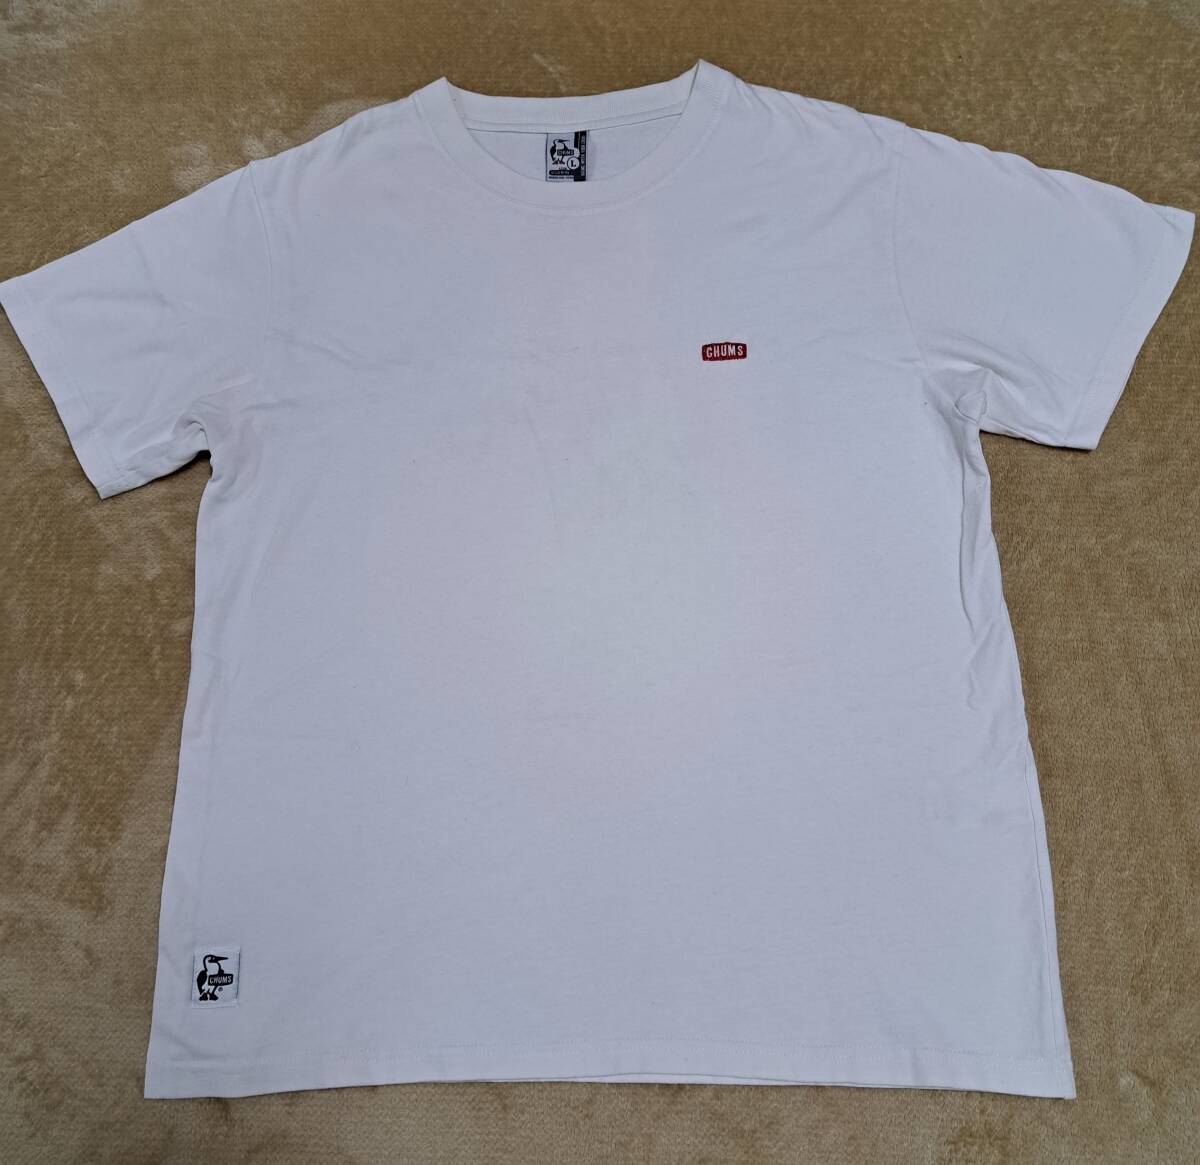 * Chums CHUMS short sleeves T-shirt L size white b- beaver do Chums Logo back print 